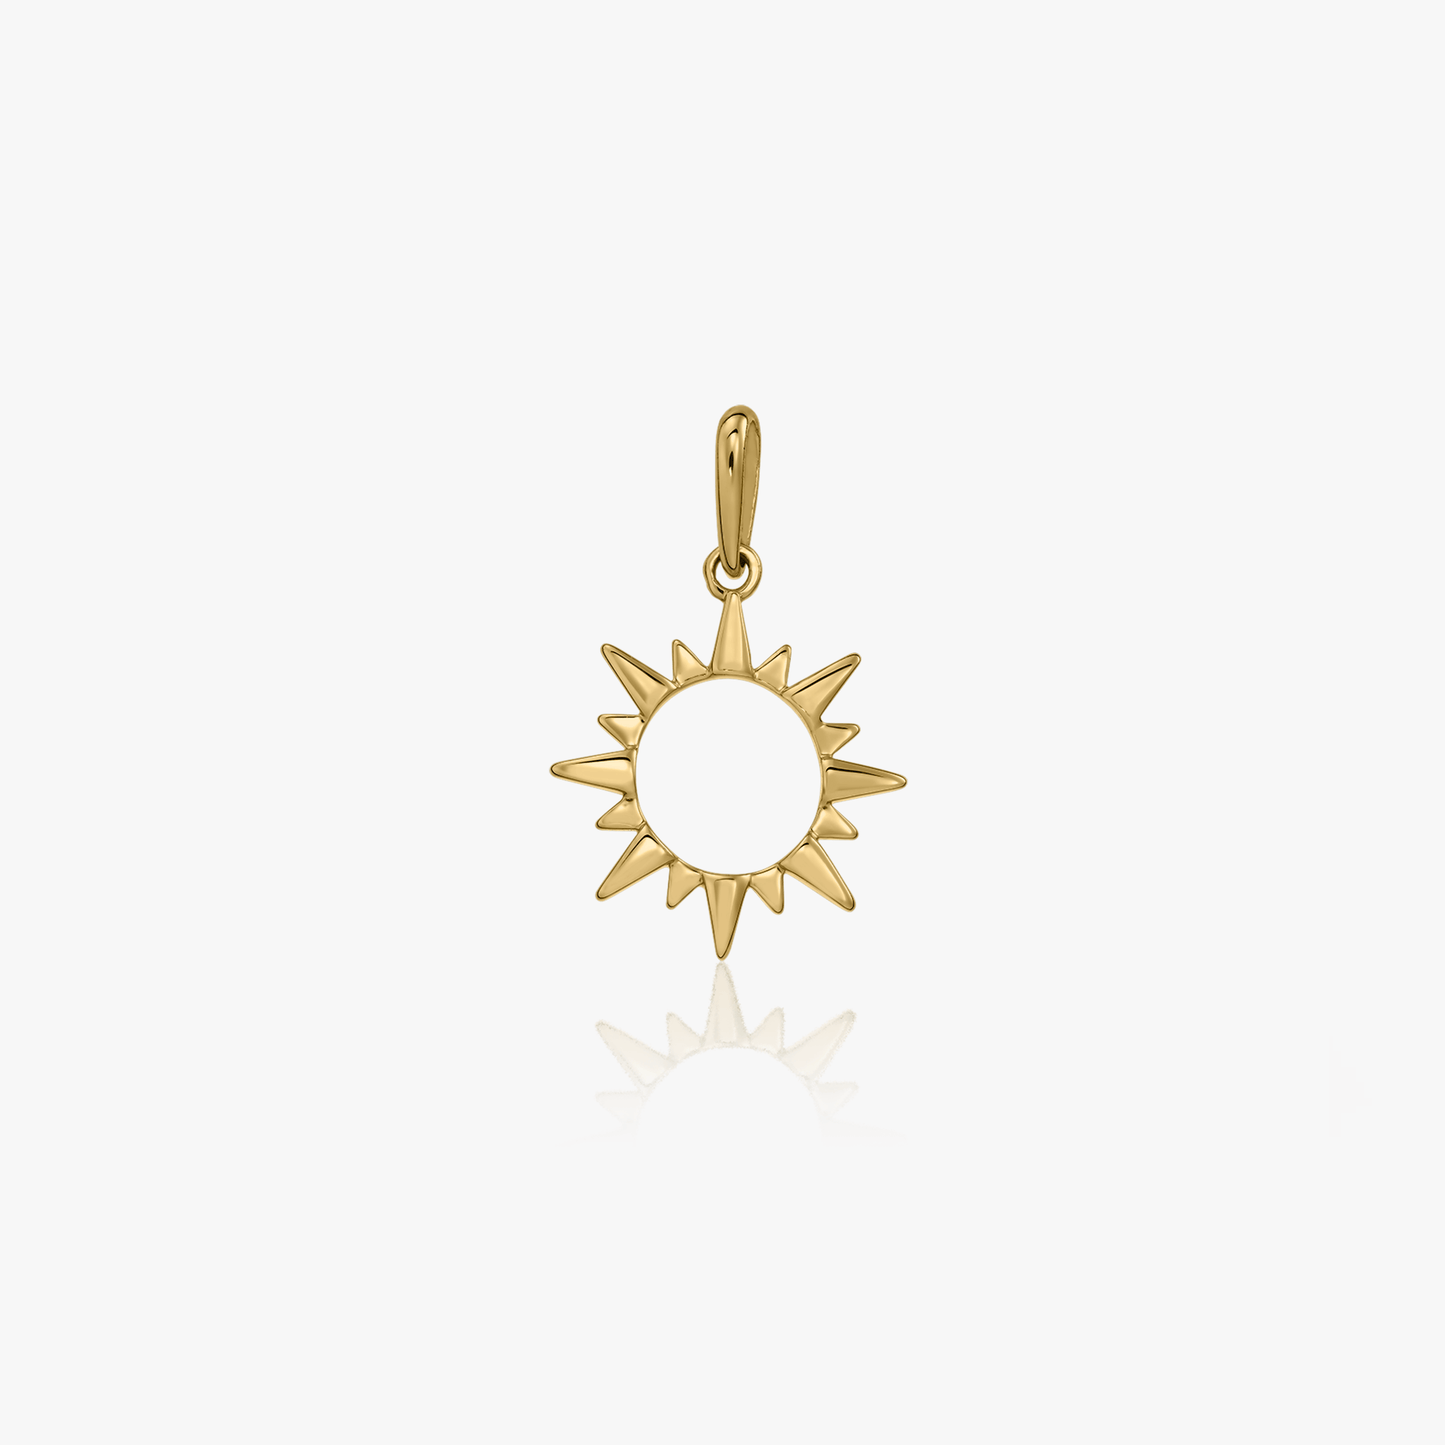 Sunshine gold pendant